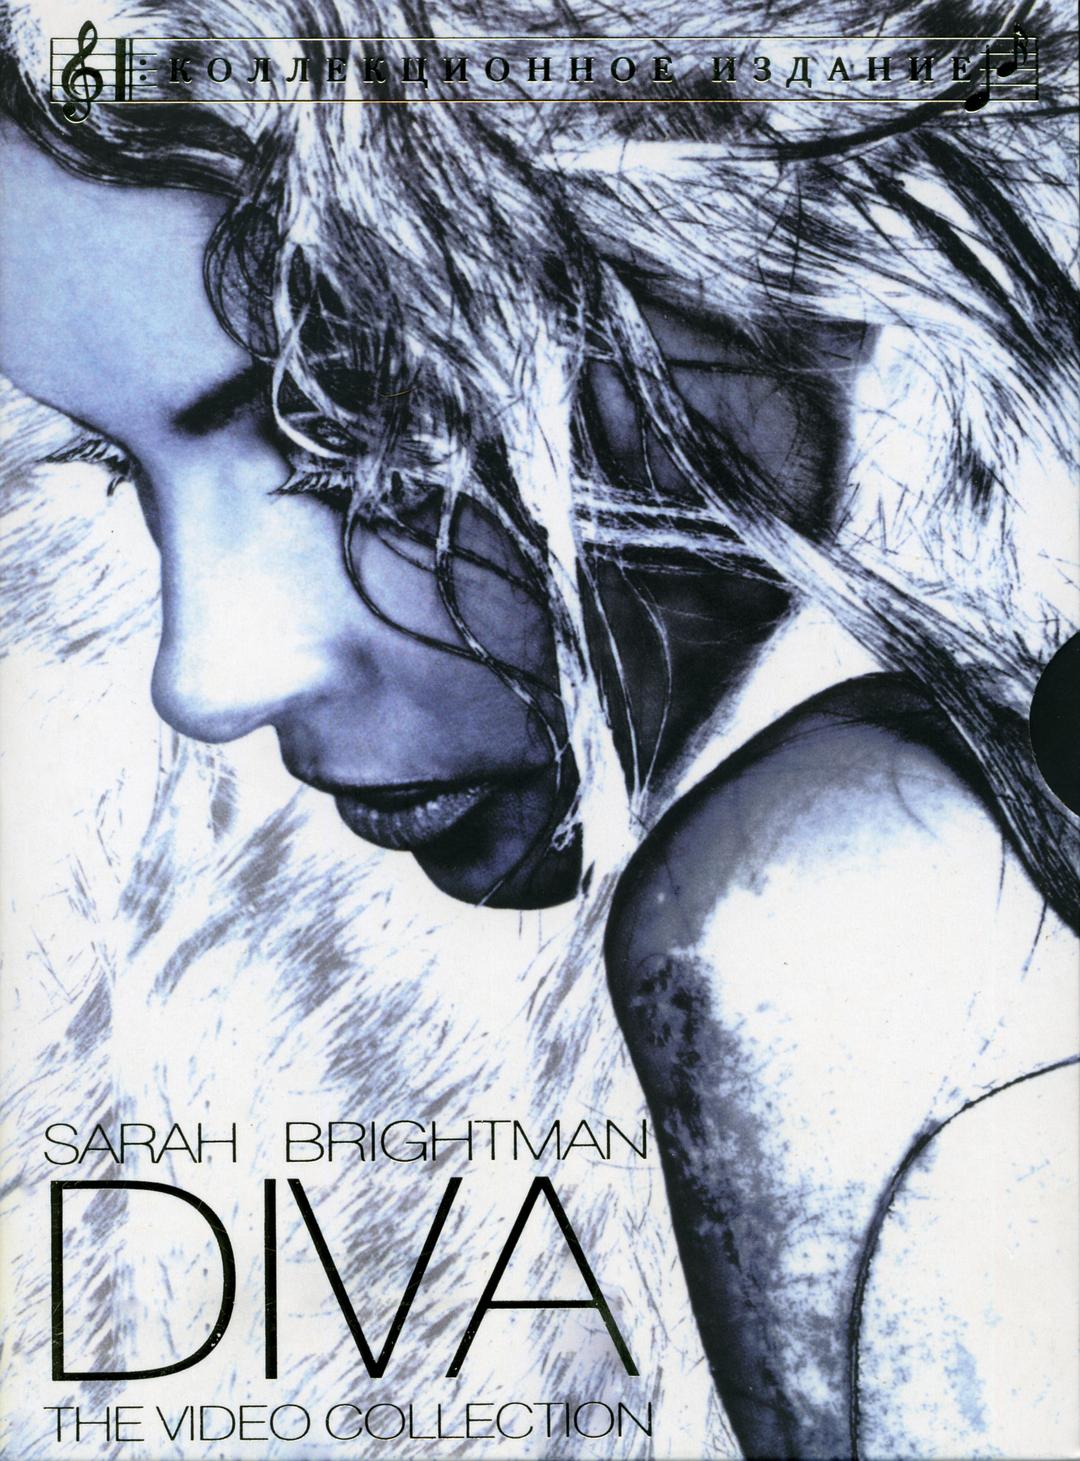 莎拉布莱曼醇精选 Sarah Brightman: Diva - The Video Collection